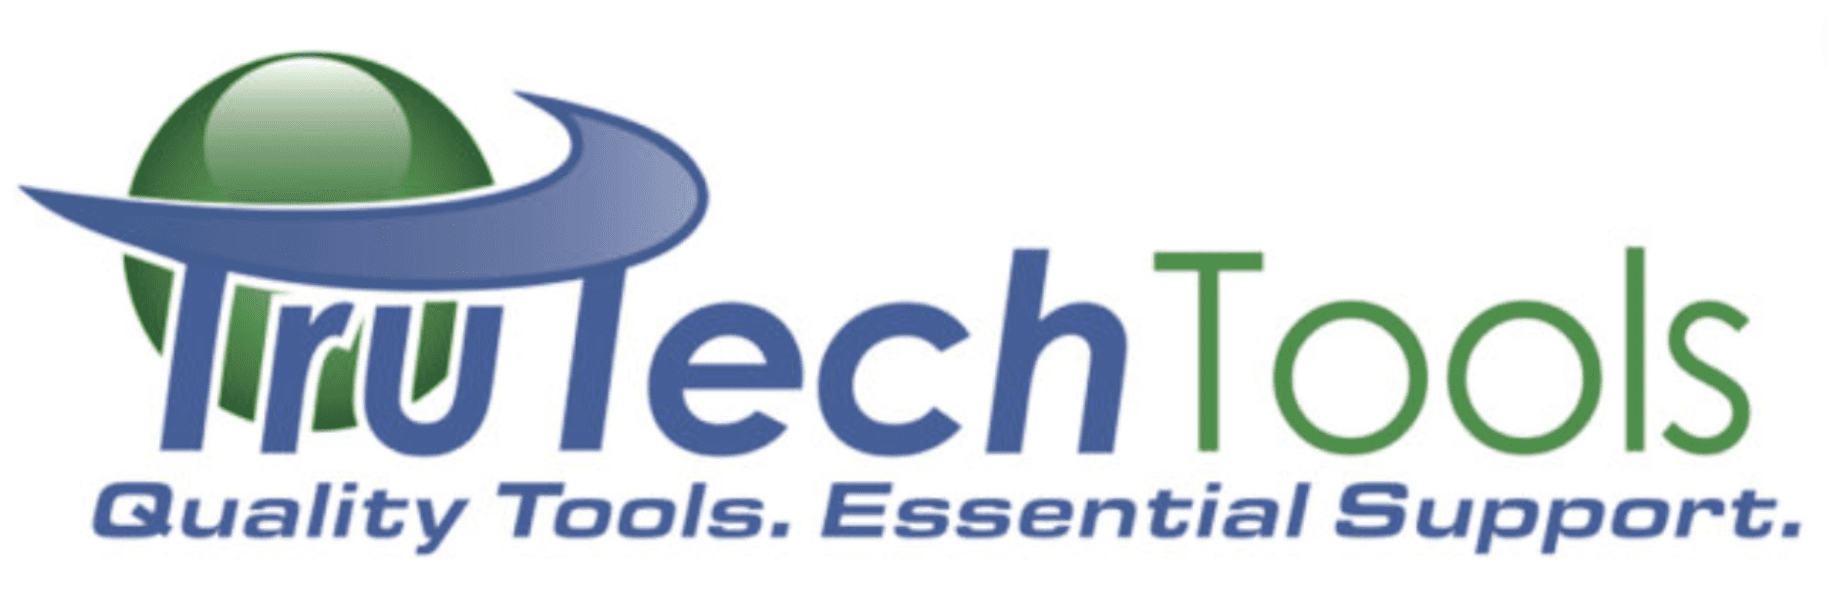 TrueTech Tools logo